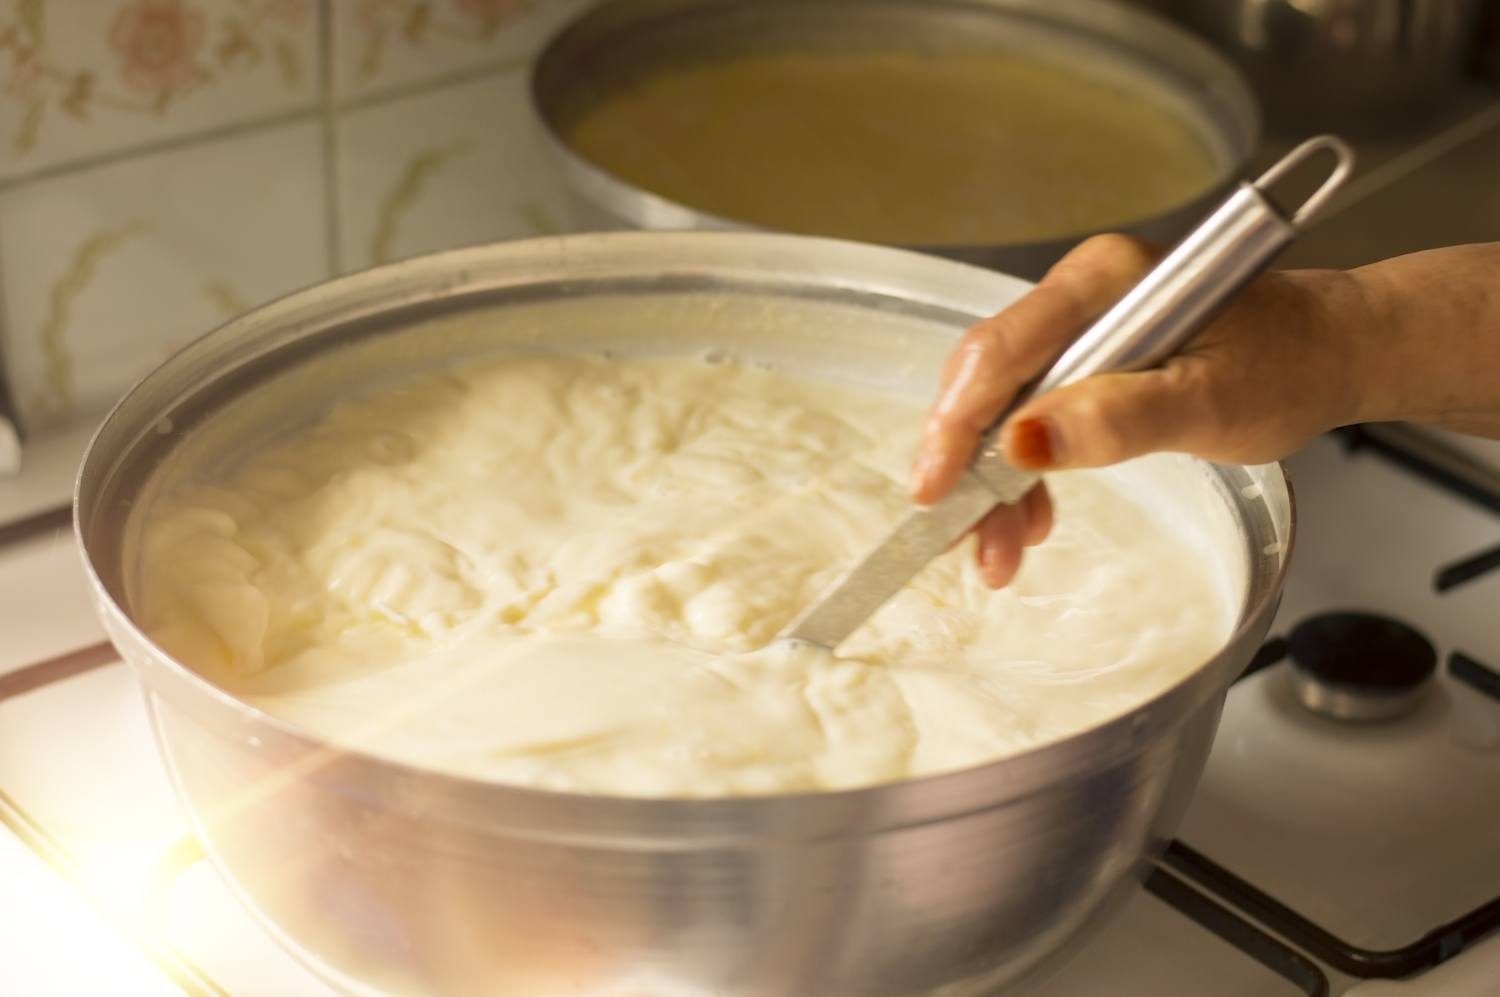 A hand preparing yogurt stirring over the stove. September 2020